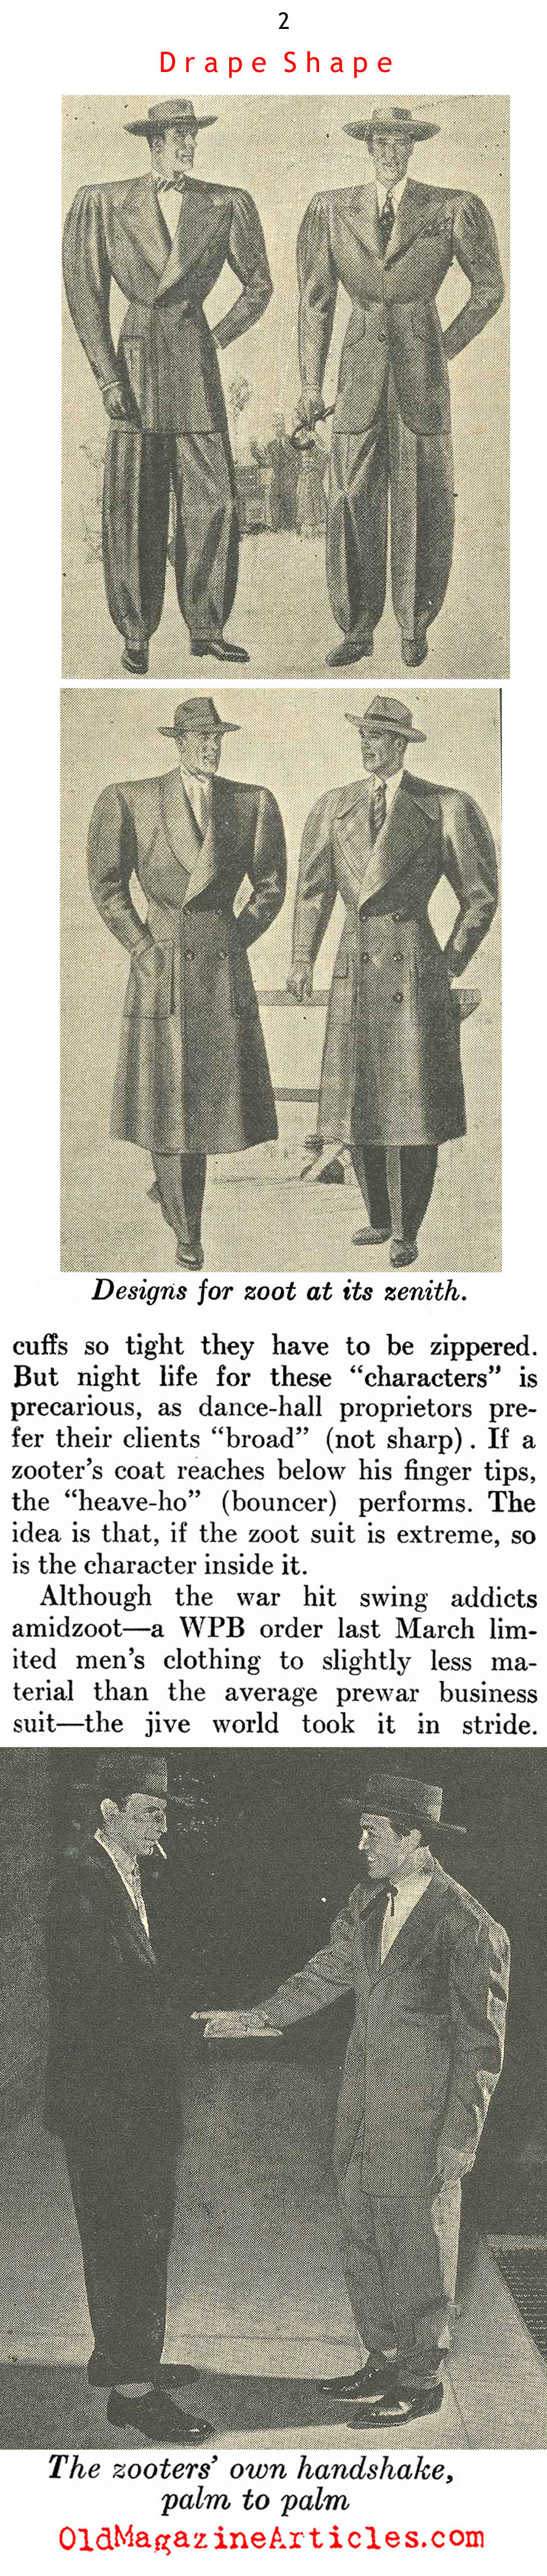 The Zoot Suit (Newsweek Magazine, 1942)